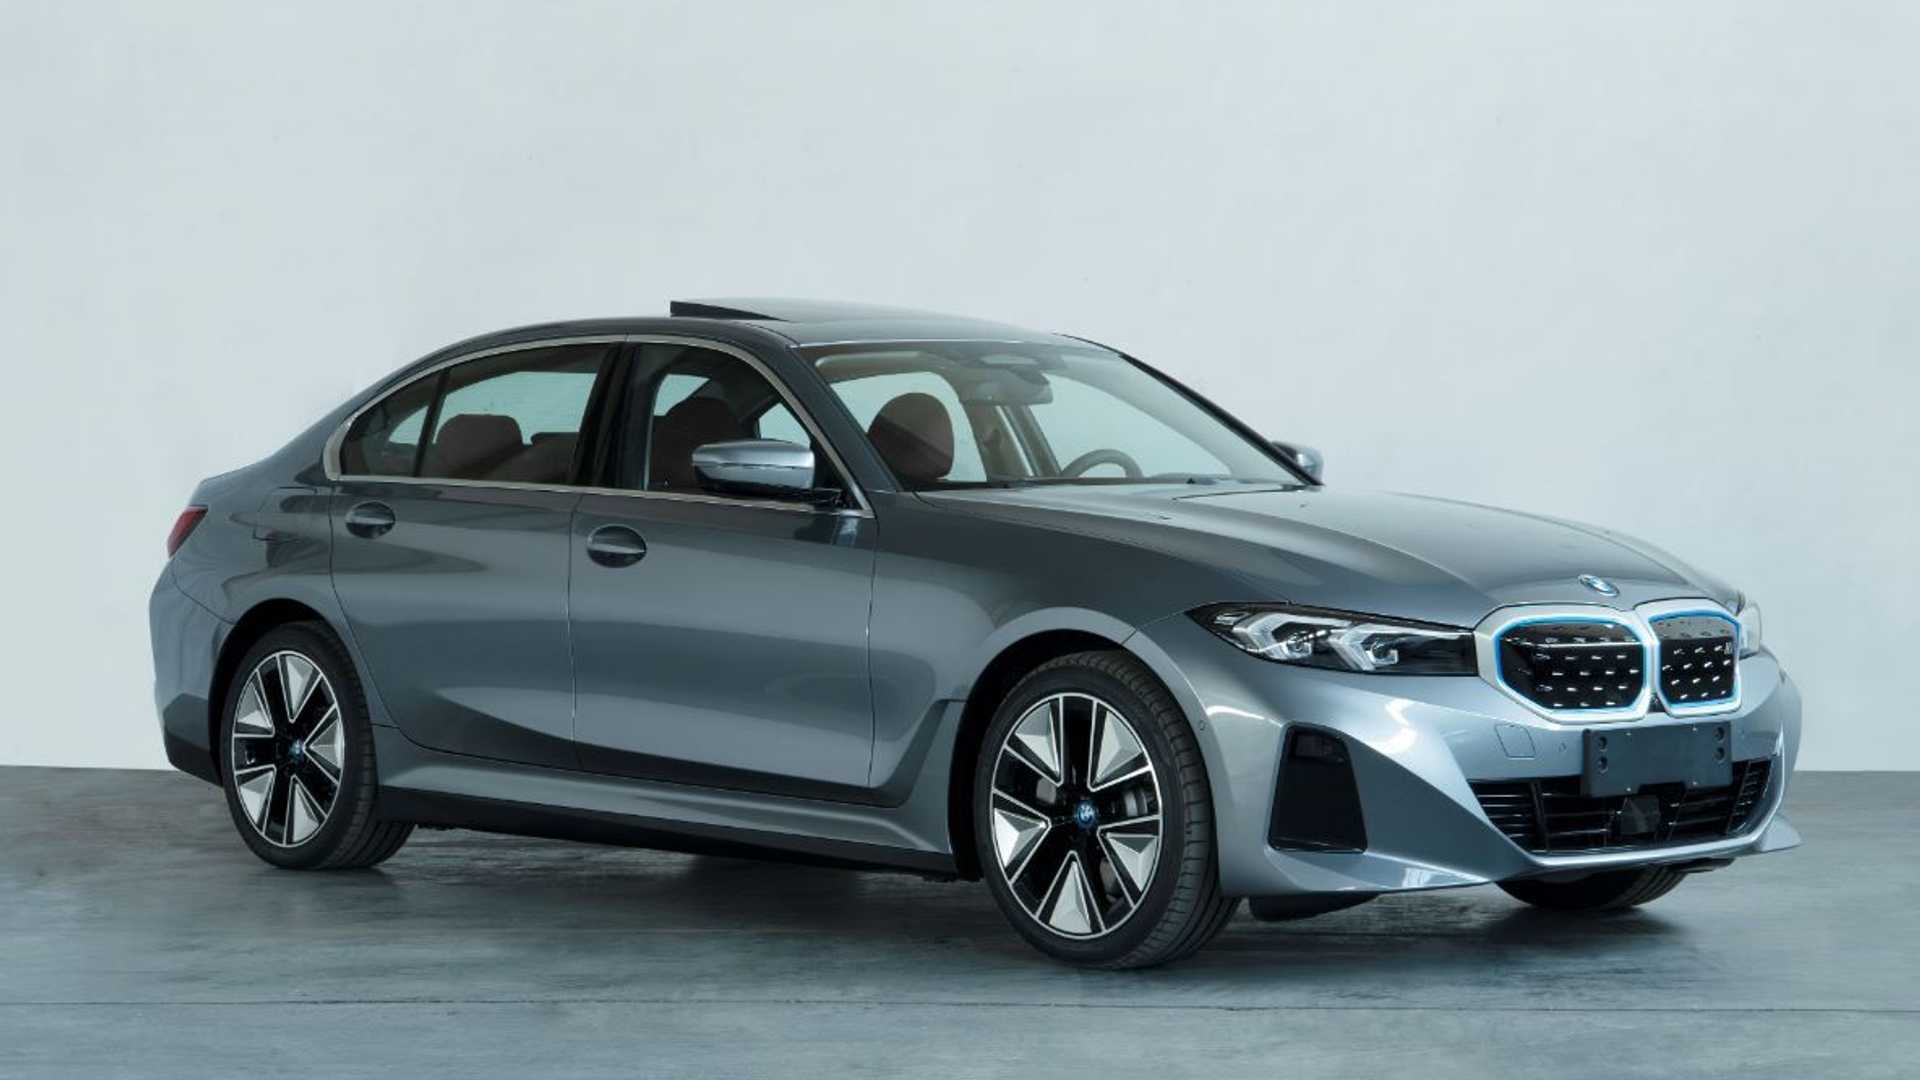 bmw i3 3 series sedan - BMW i3 will be transformed into a sedan version in China